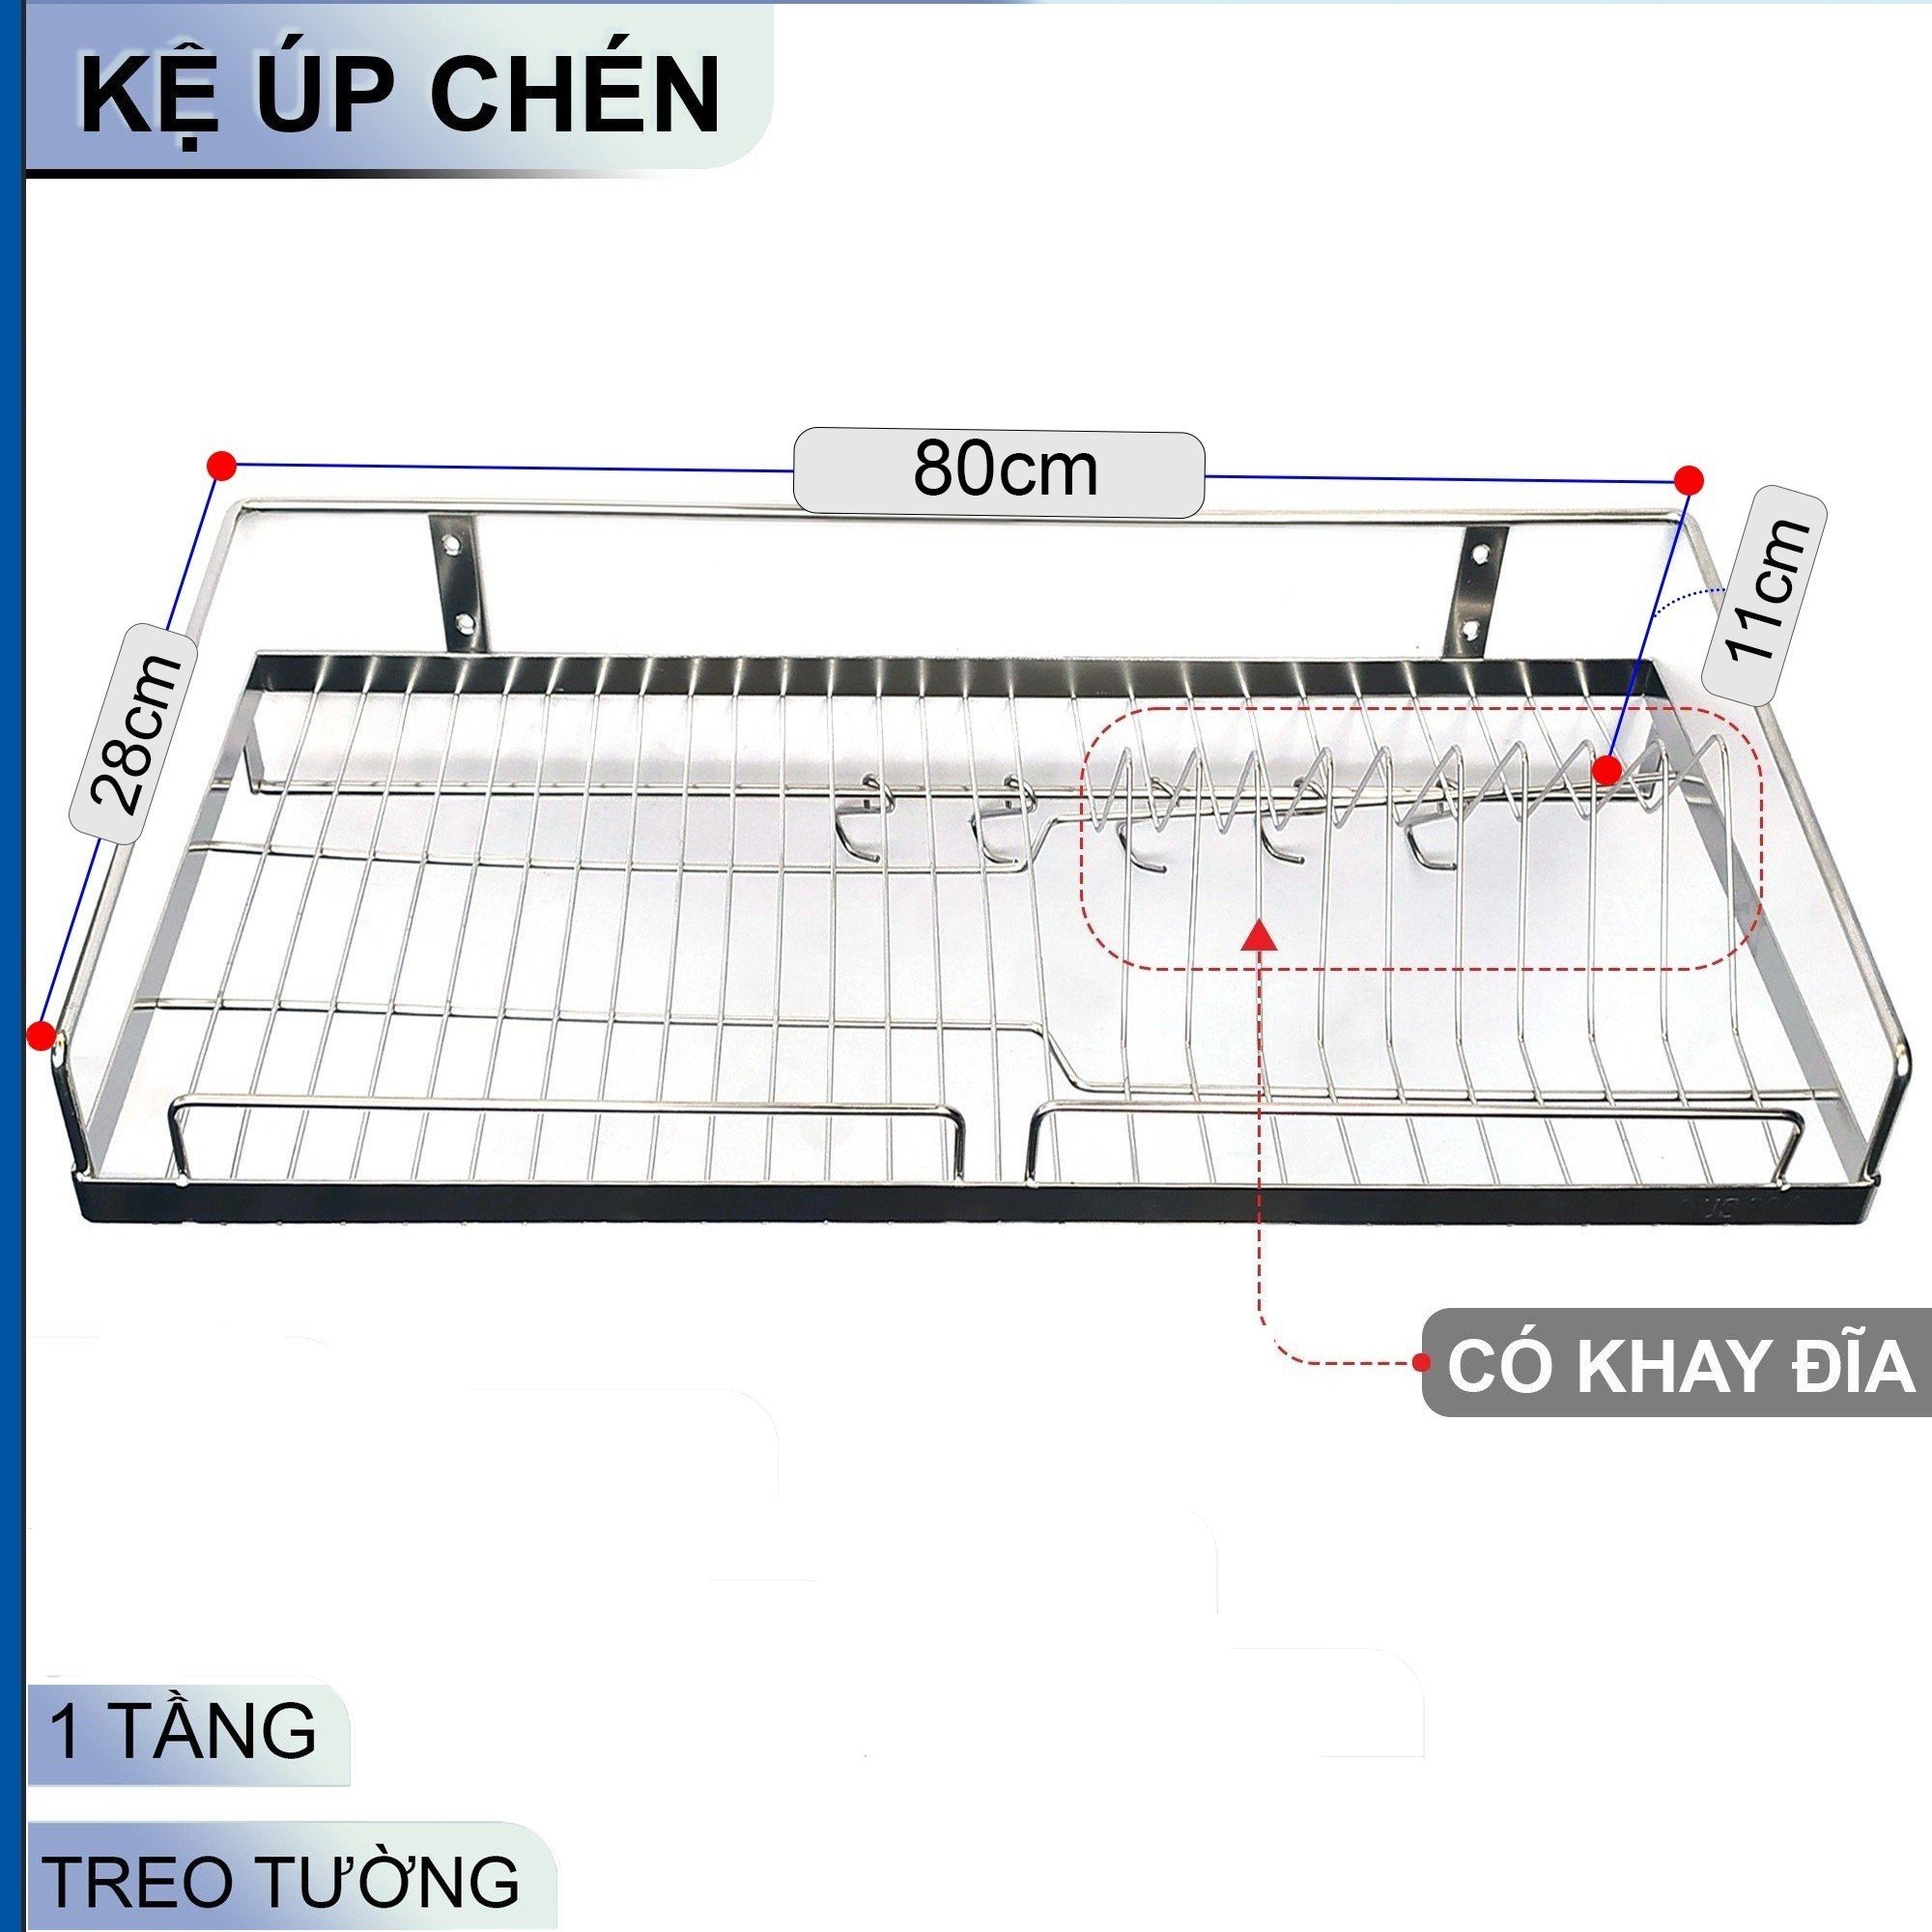 ke-chen-1-tang-inox-ki-cd02-80cm-vattugiagoc.com